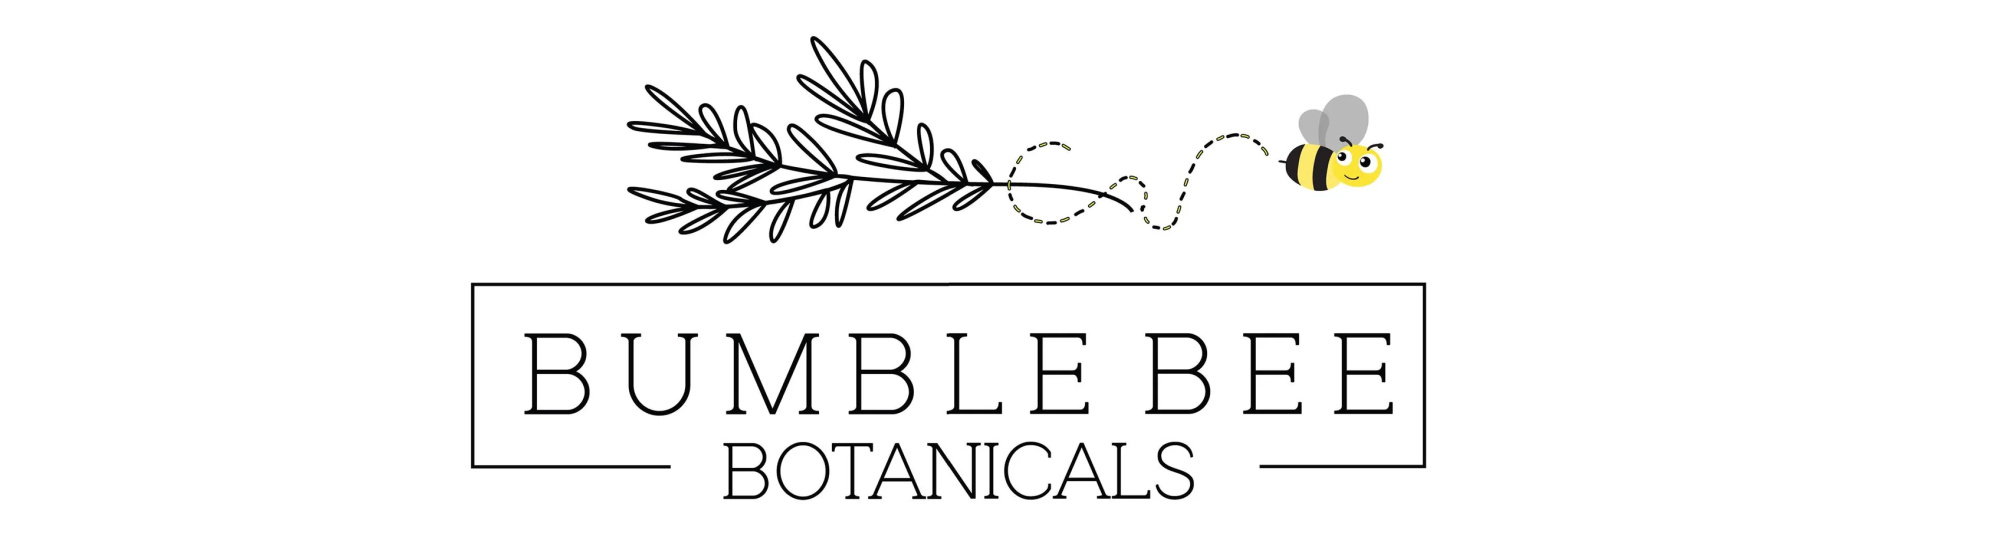 image of bumble bee botanicals in idaho